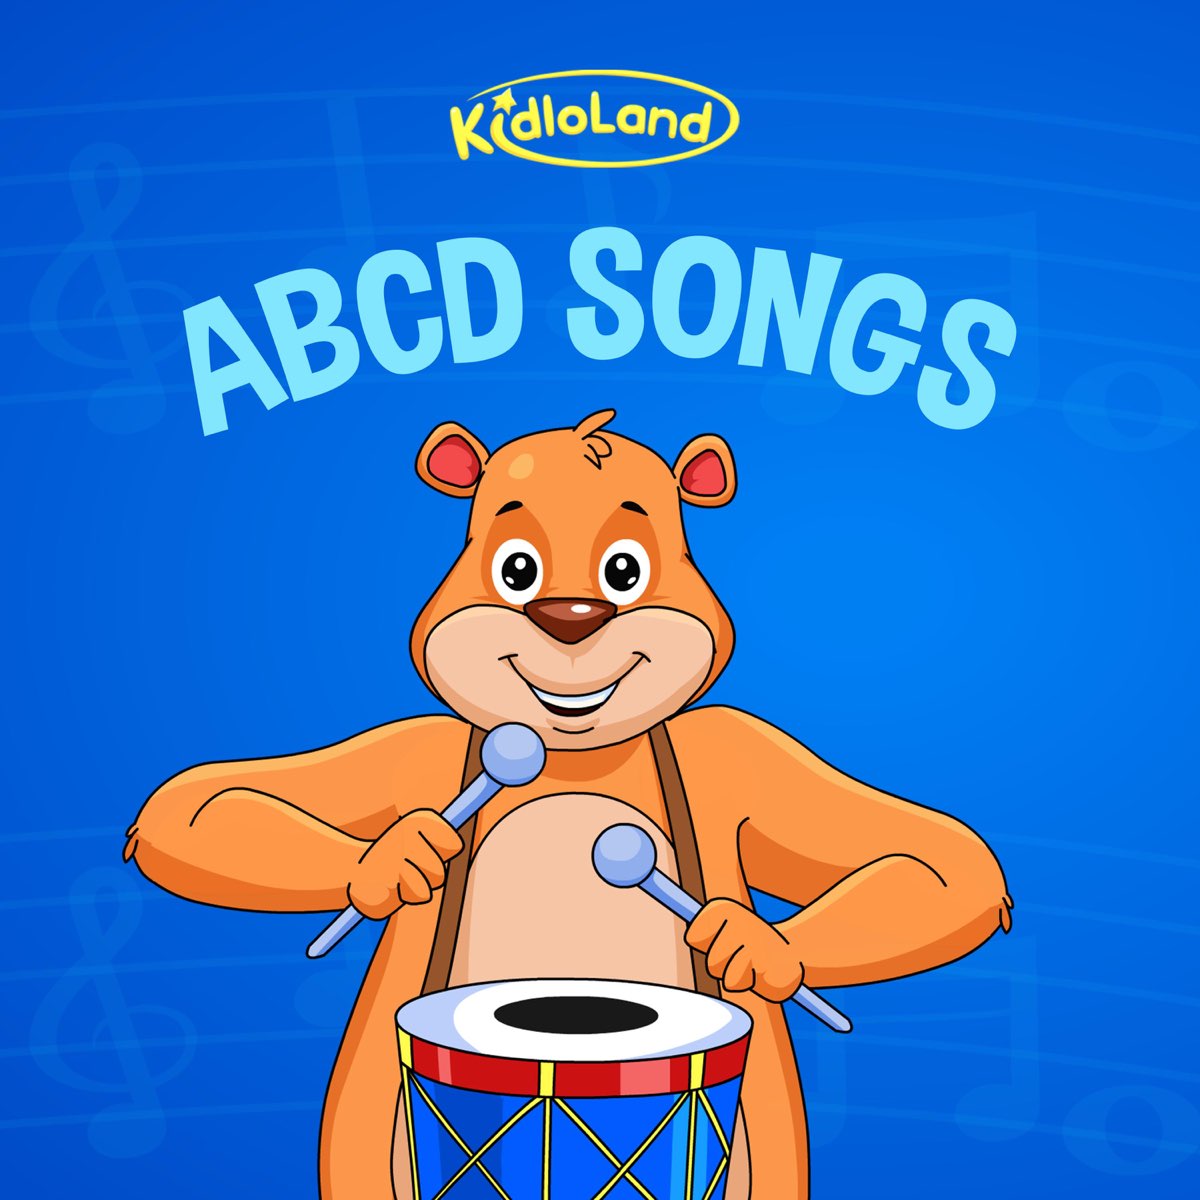 Kidloland Abcd Songs by Kidloland on Apple Music